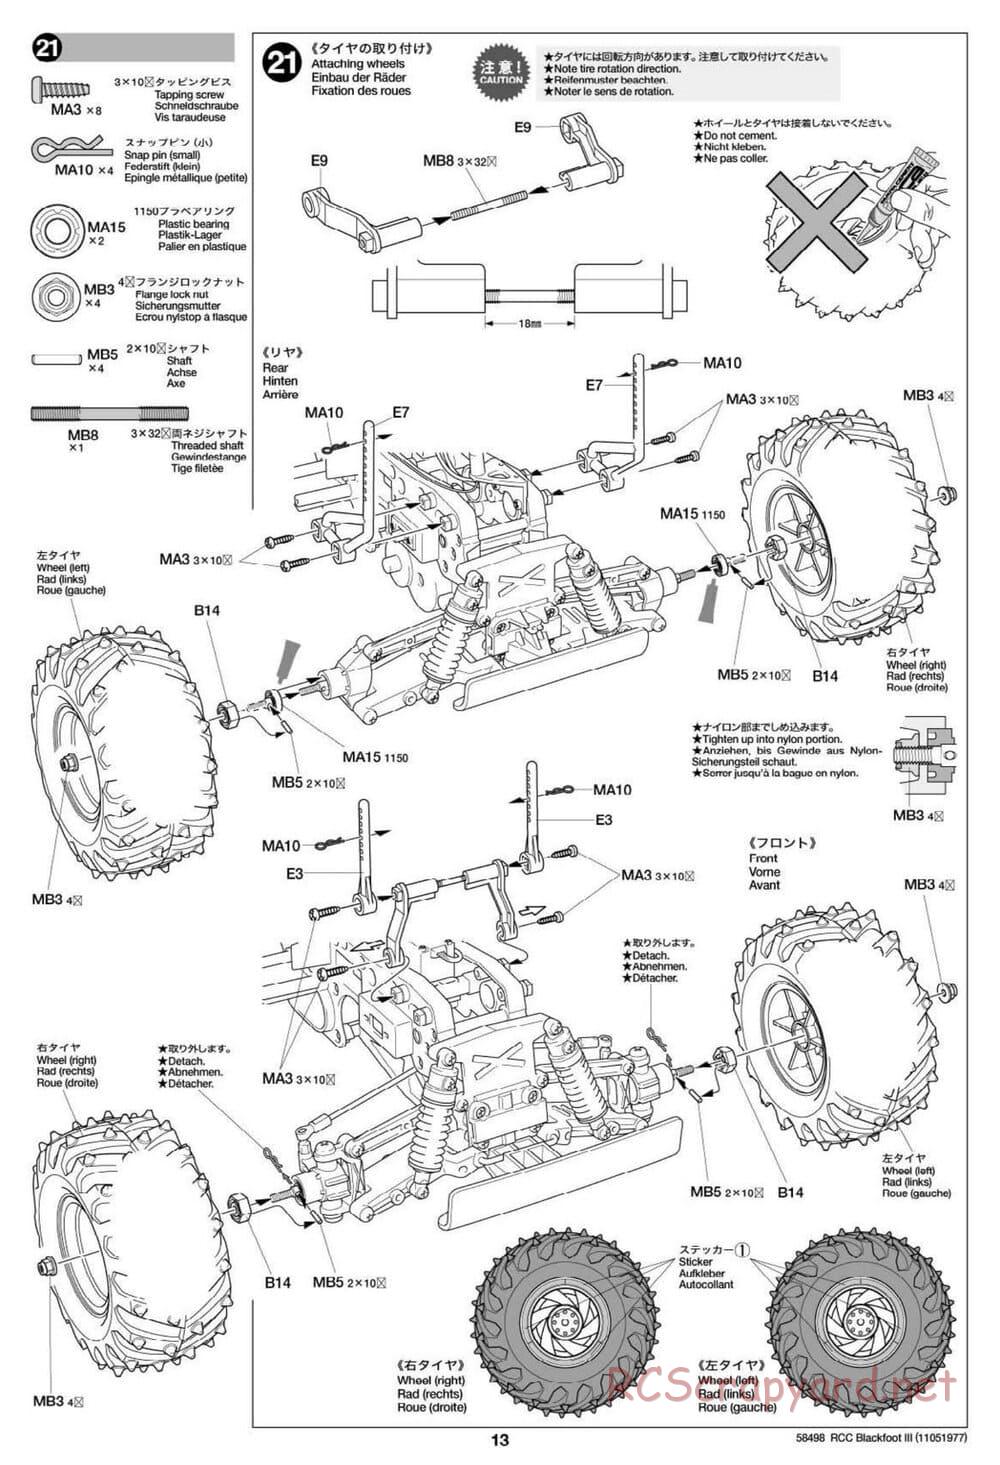 Tamiya - Blackfoot III - WT-01 Chassis - Manual - Page 13